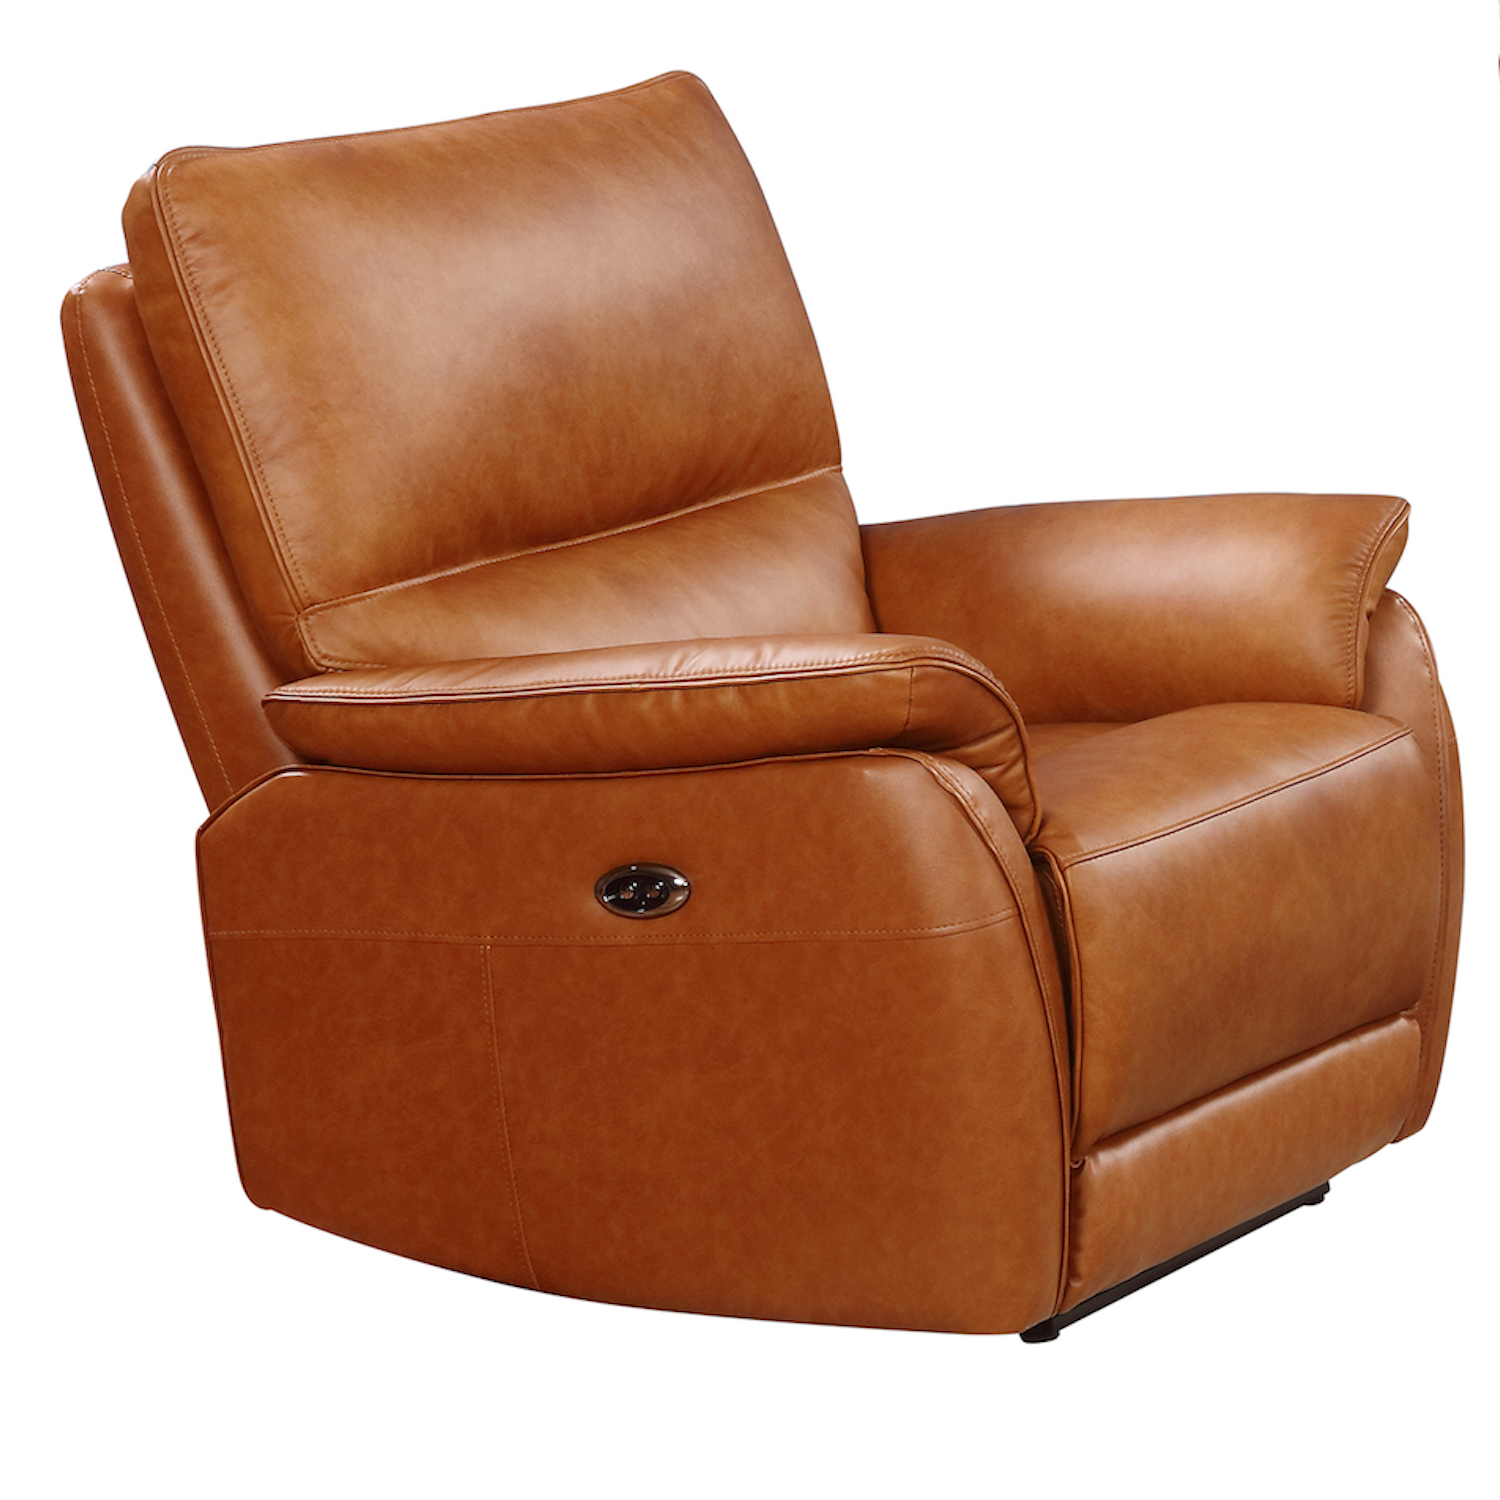 Esprit Power Recliner Chair Tan Leather